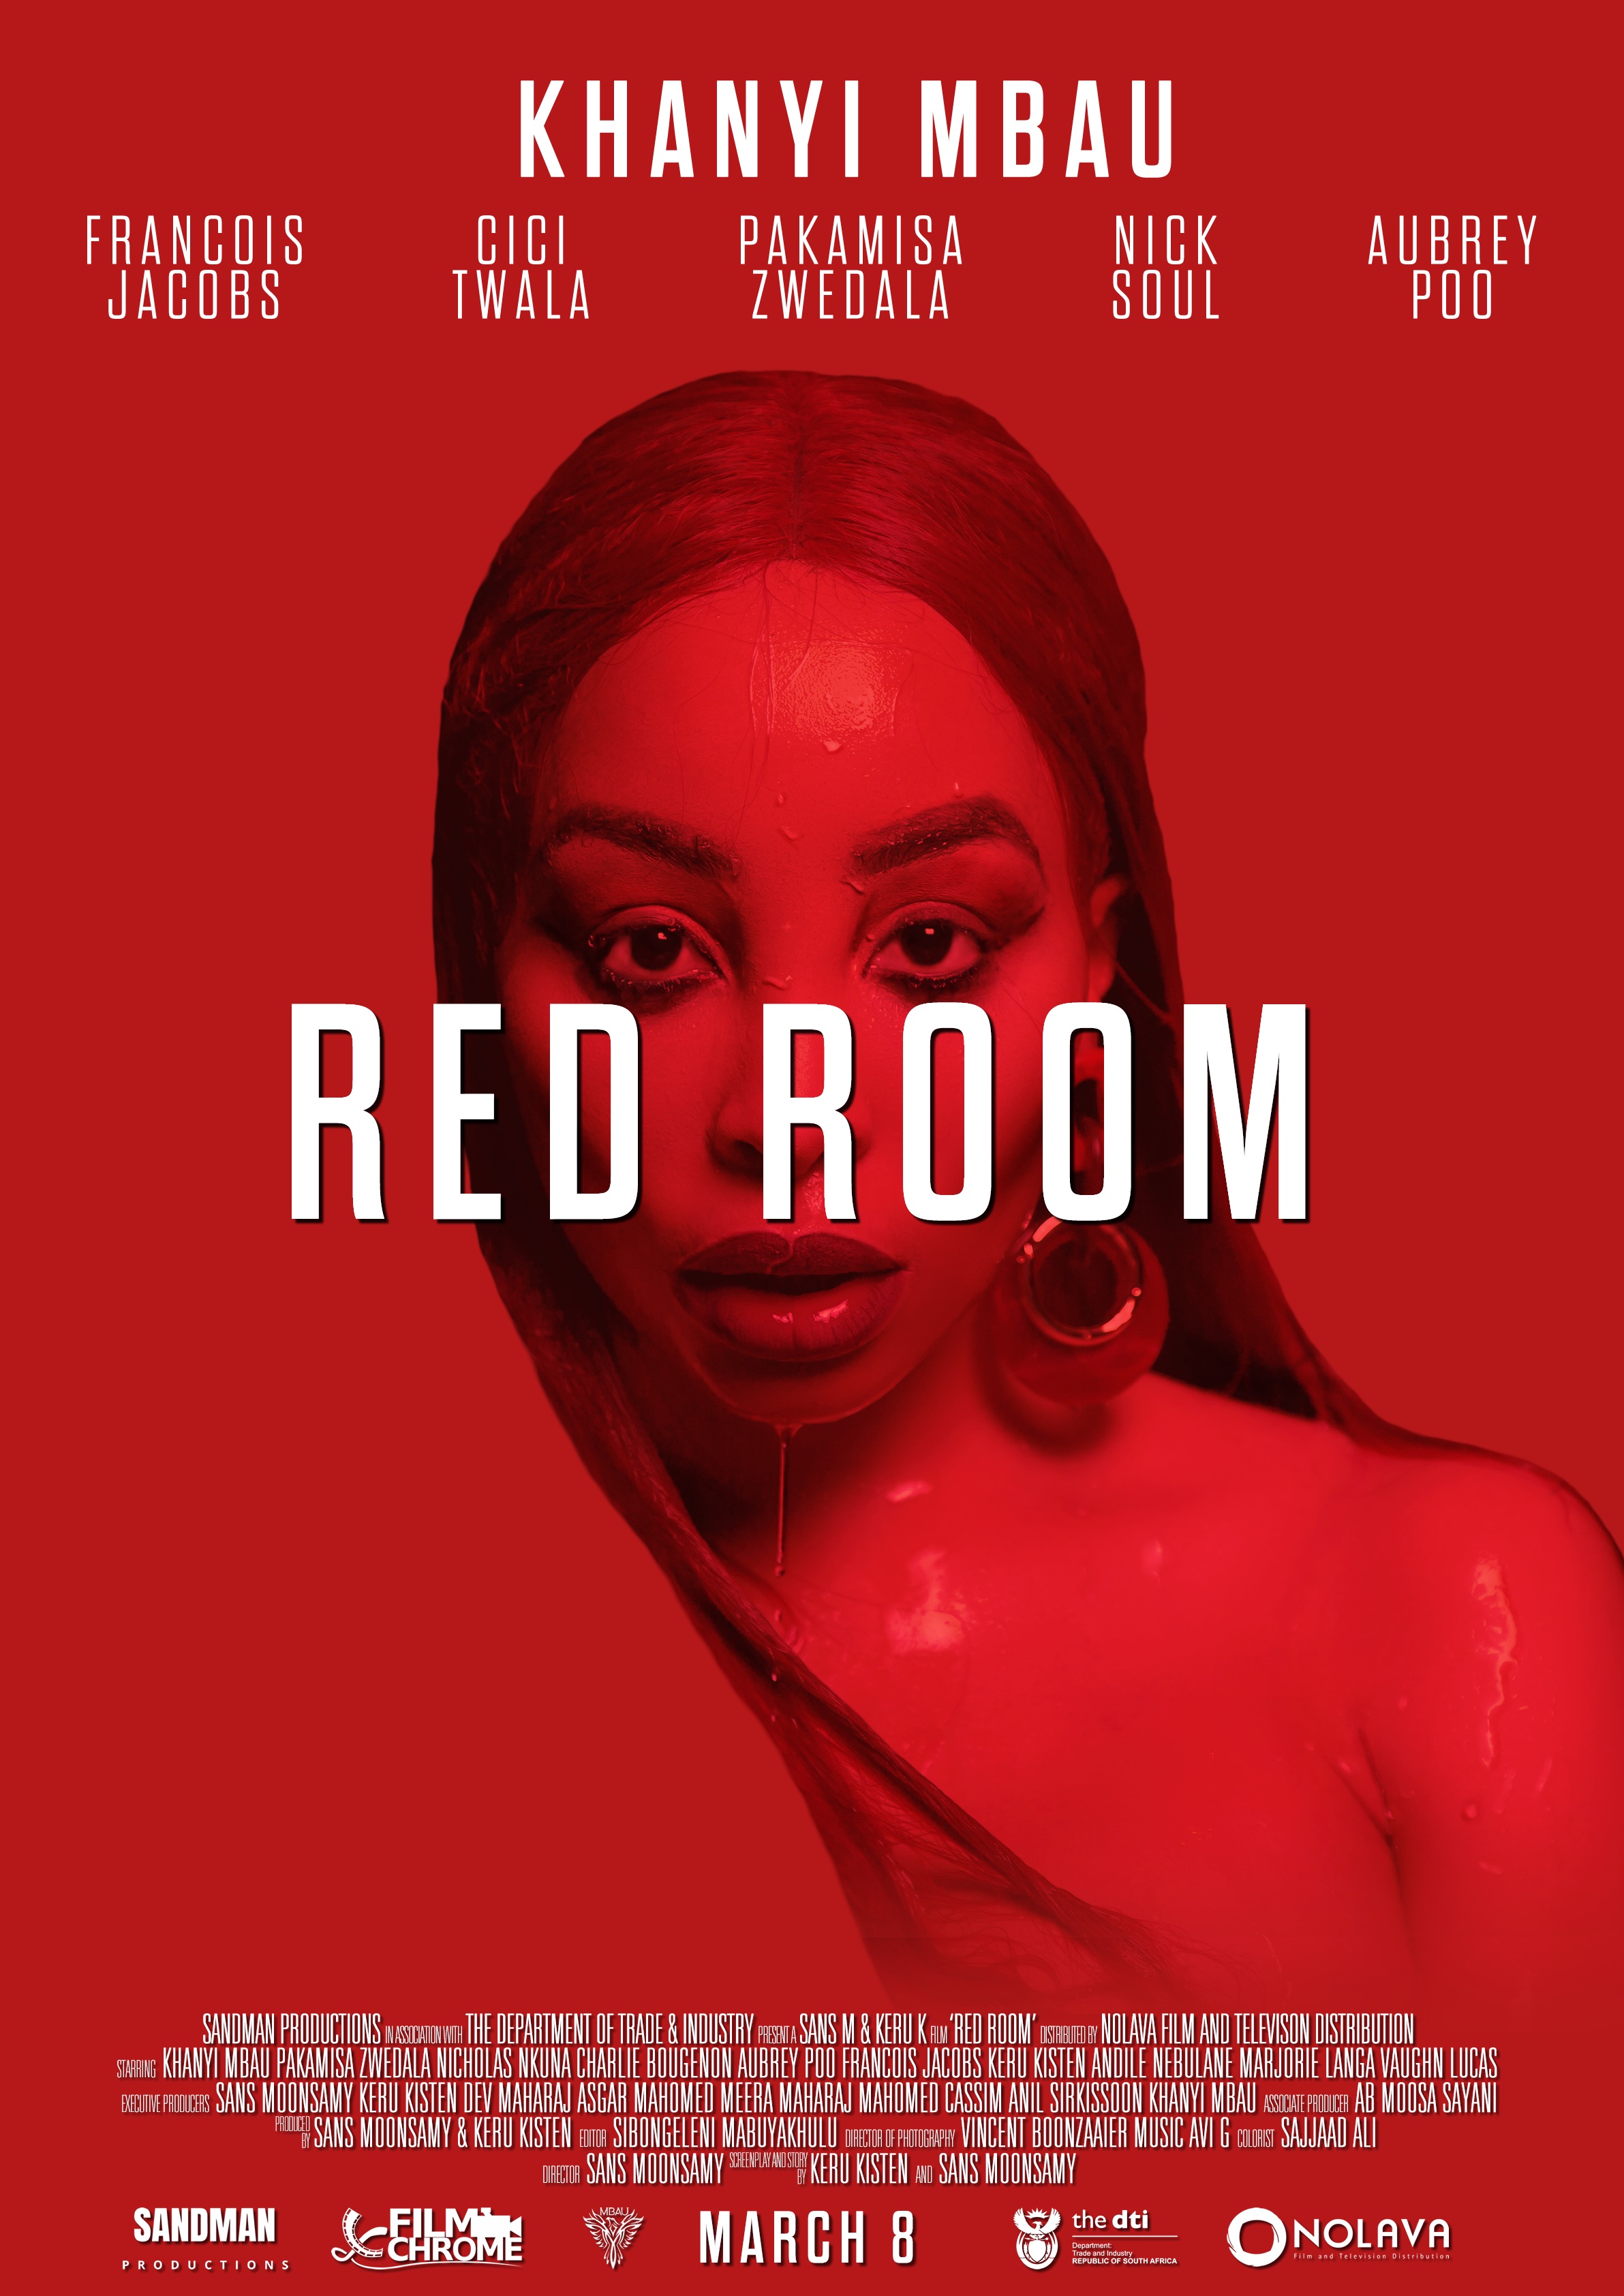 Nonton film Red Room layarkaca21 indoxx1 ganool online streaming terbaru